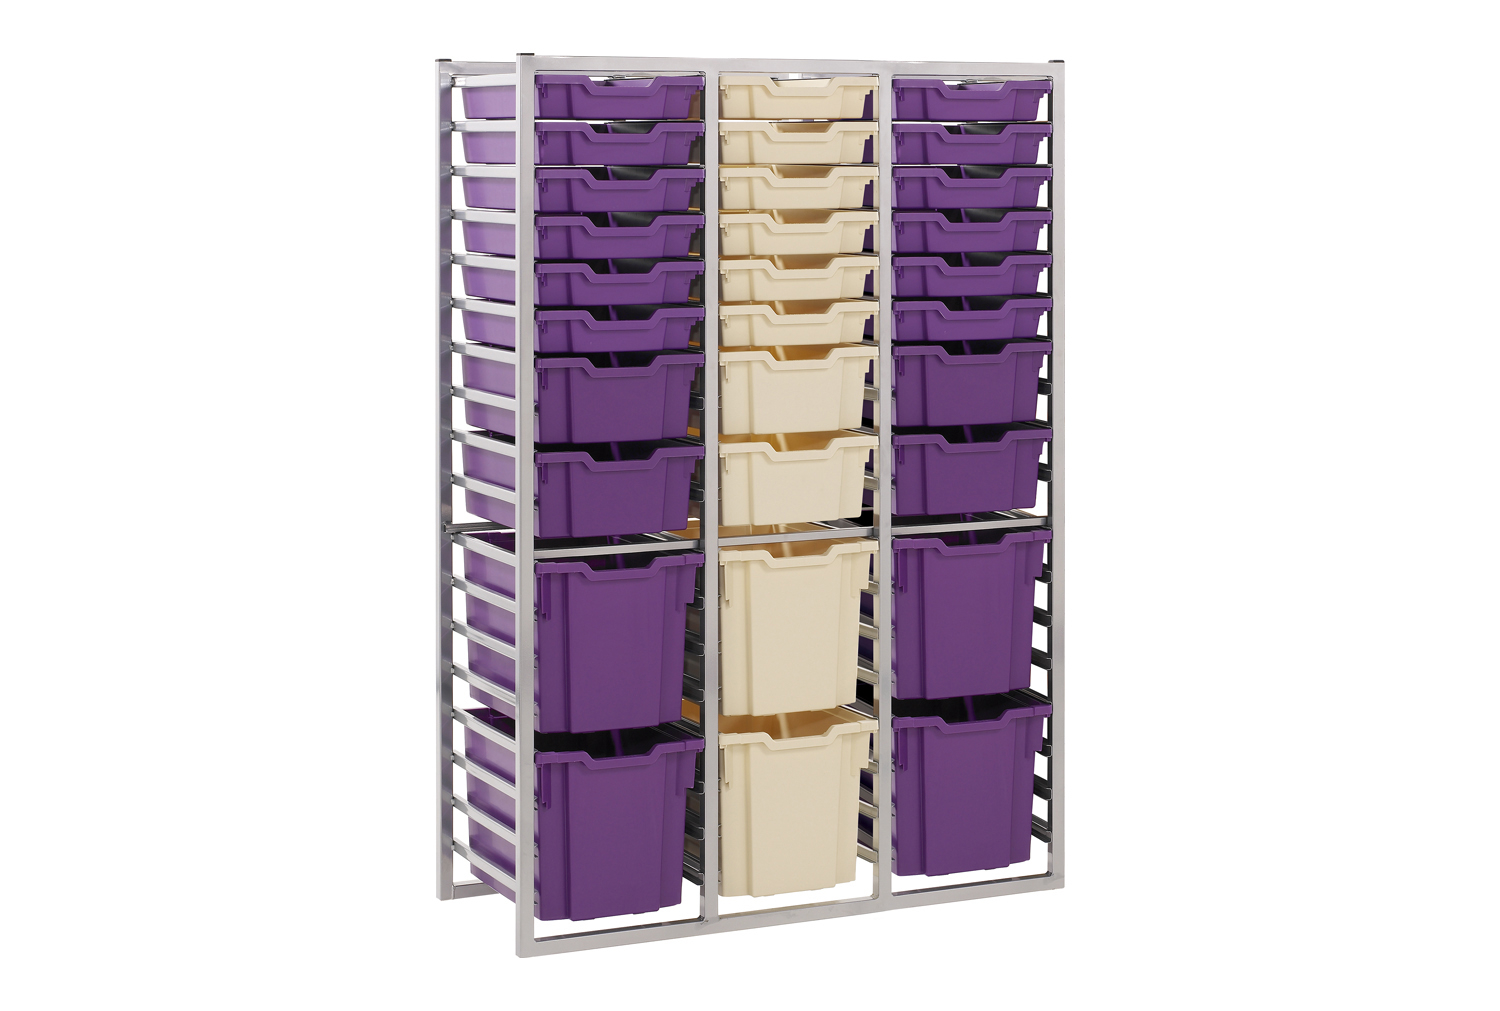 Metalliform Triple Column Metal Classroom Tray Storage Unit Only (Holds 54 Standard Classroom Trays), Light Grey